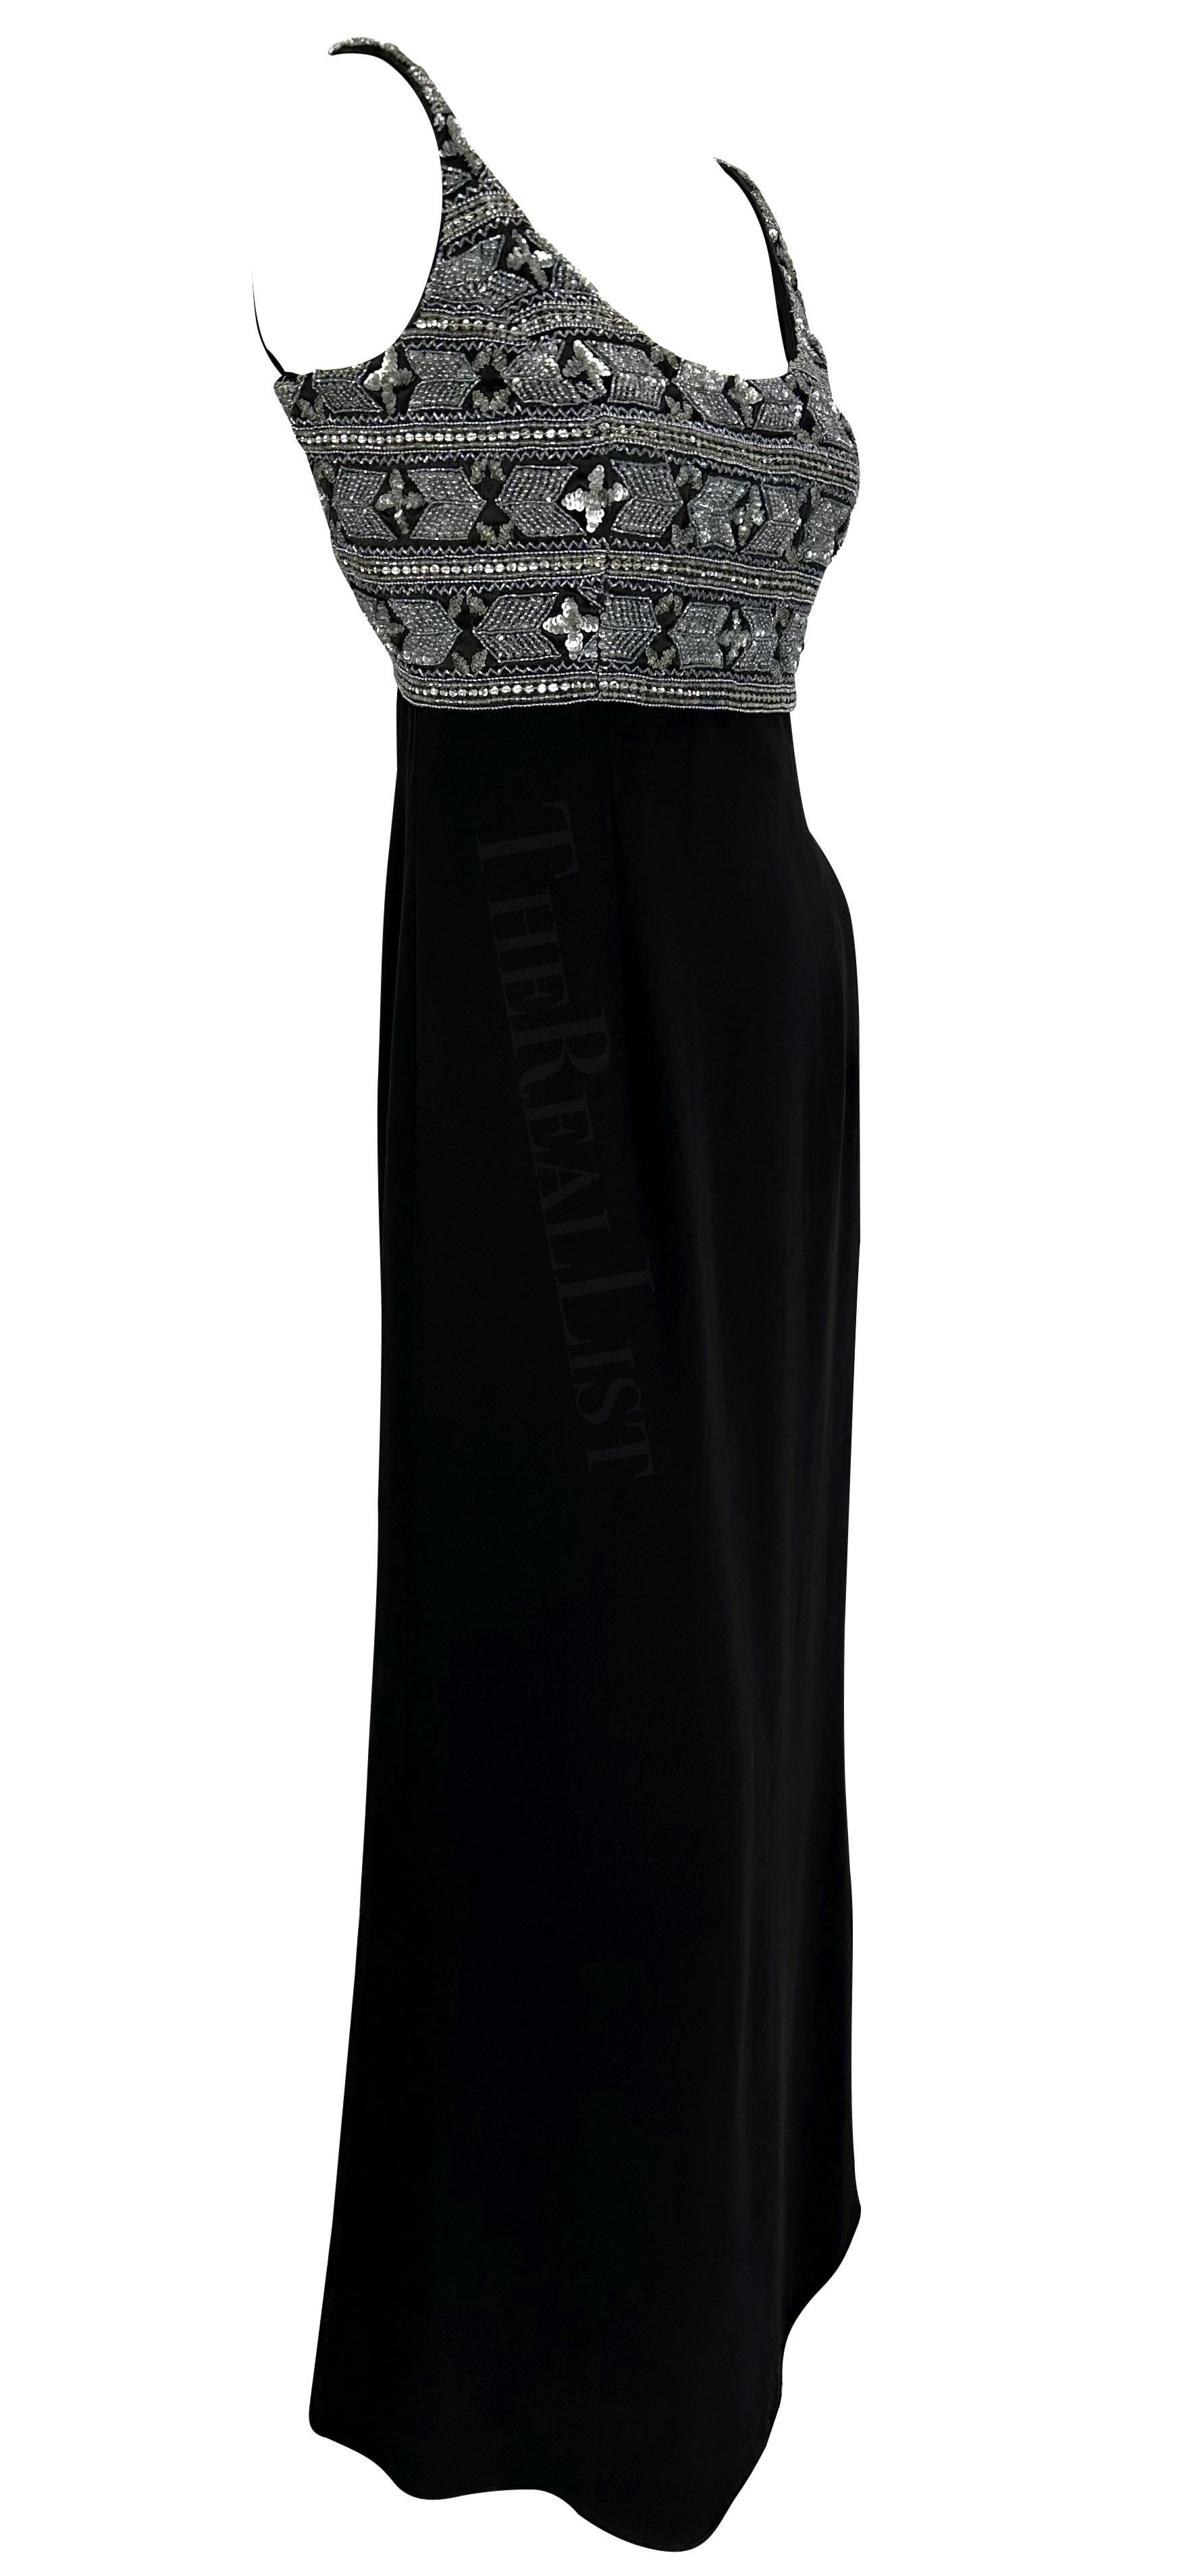 S/S 1996 Giorgio Armani Backless Black Silver Beaded Dress For Sale 6